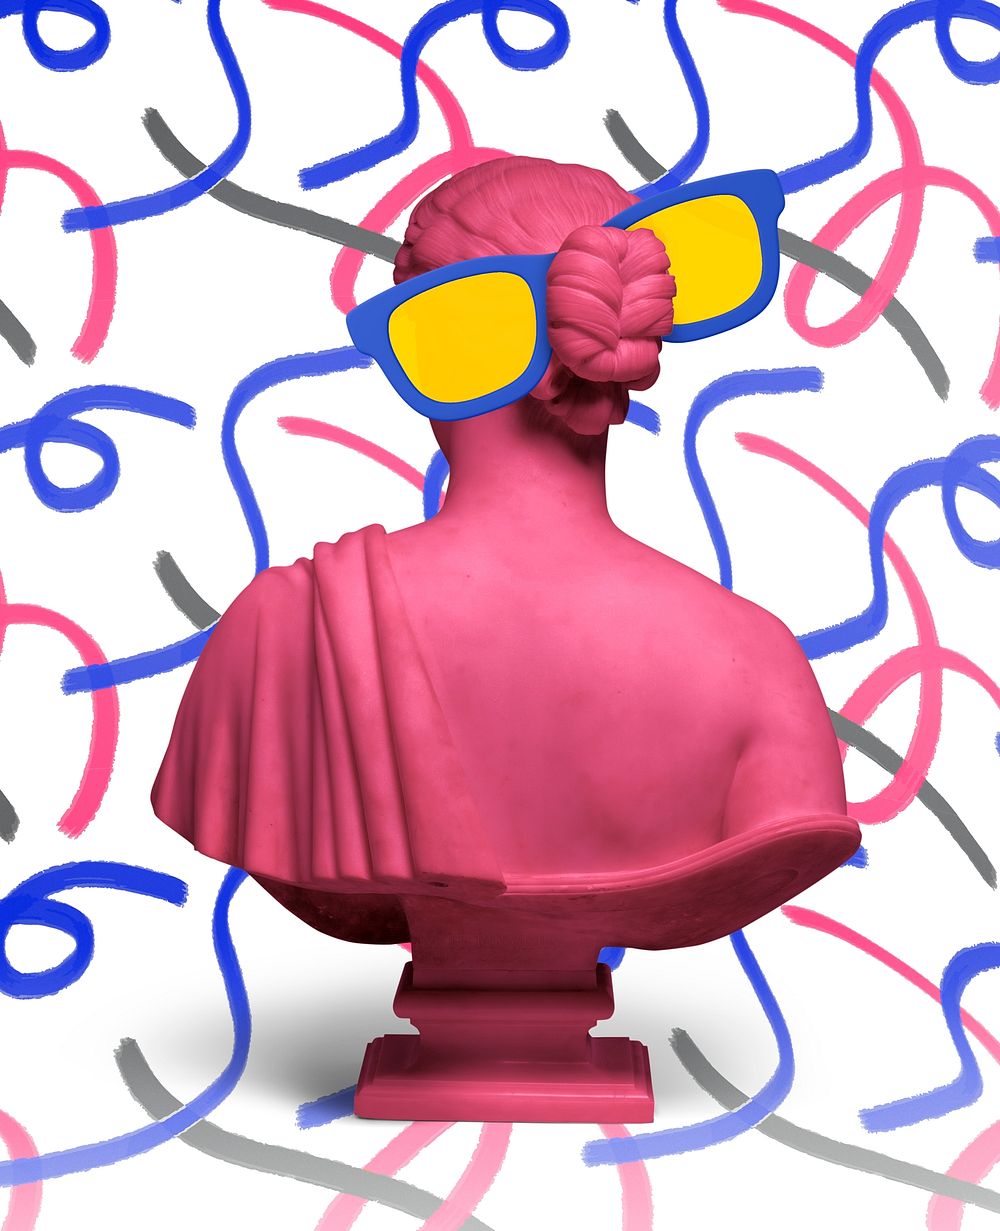 Pink Greek Goddess sculpture, abstract doodle pattern background psd